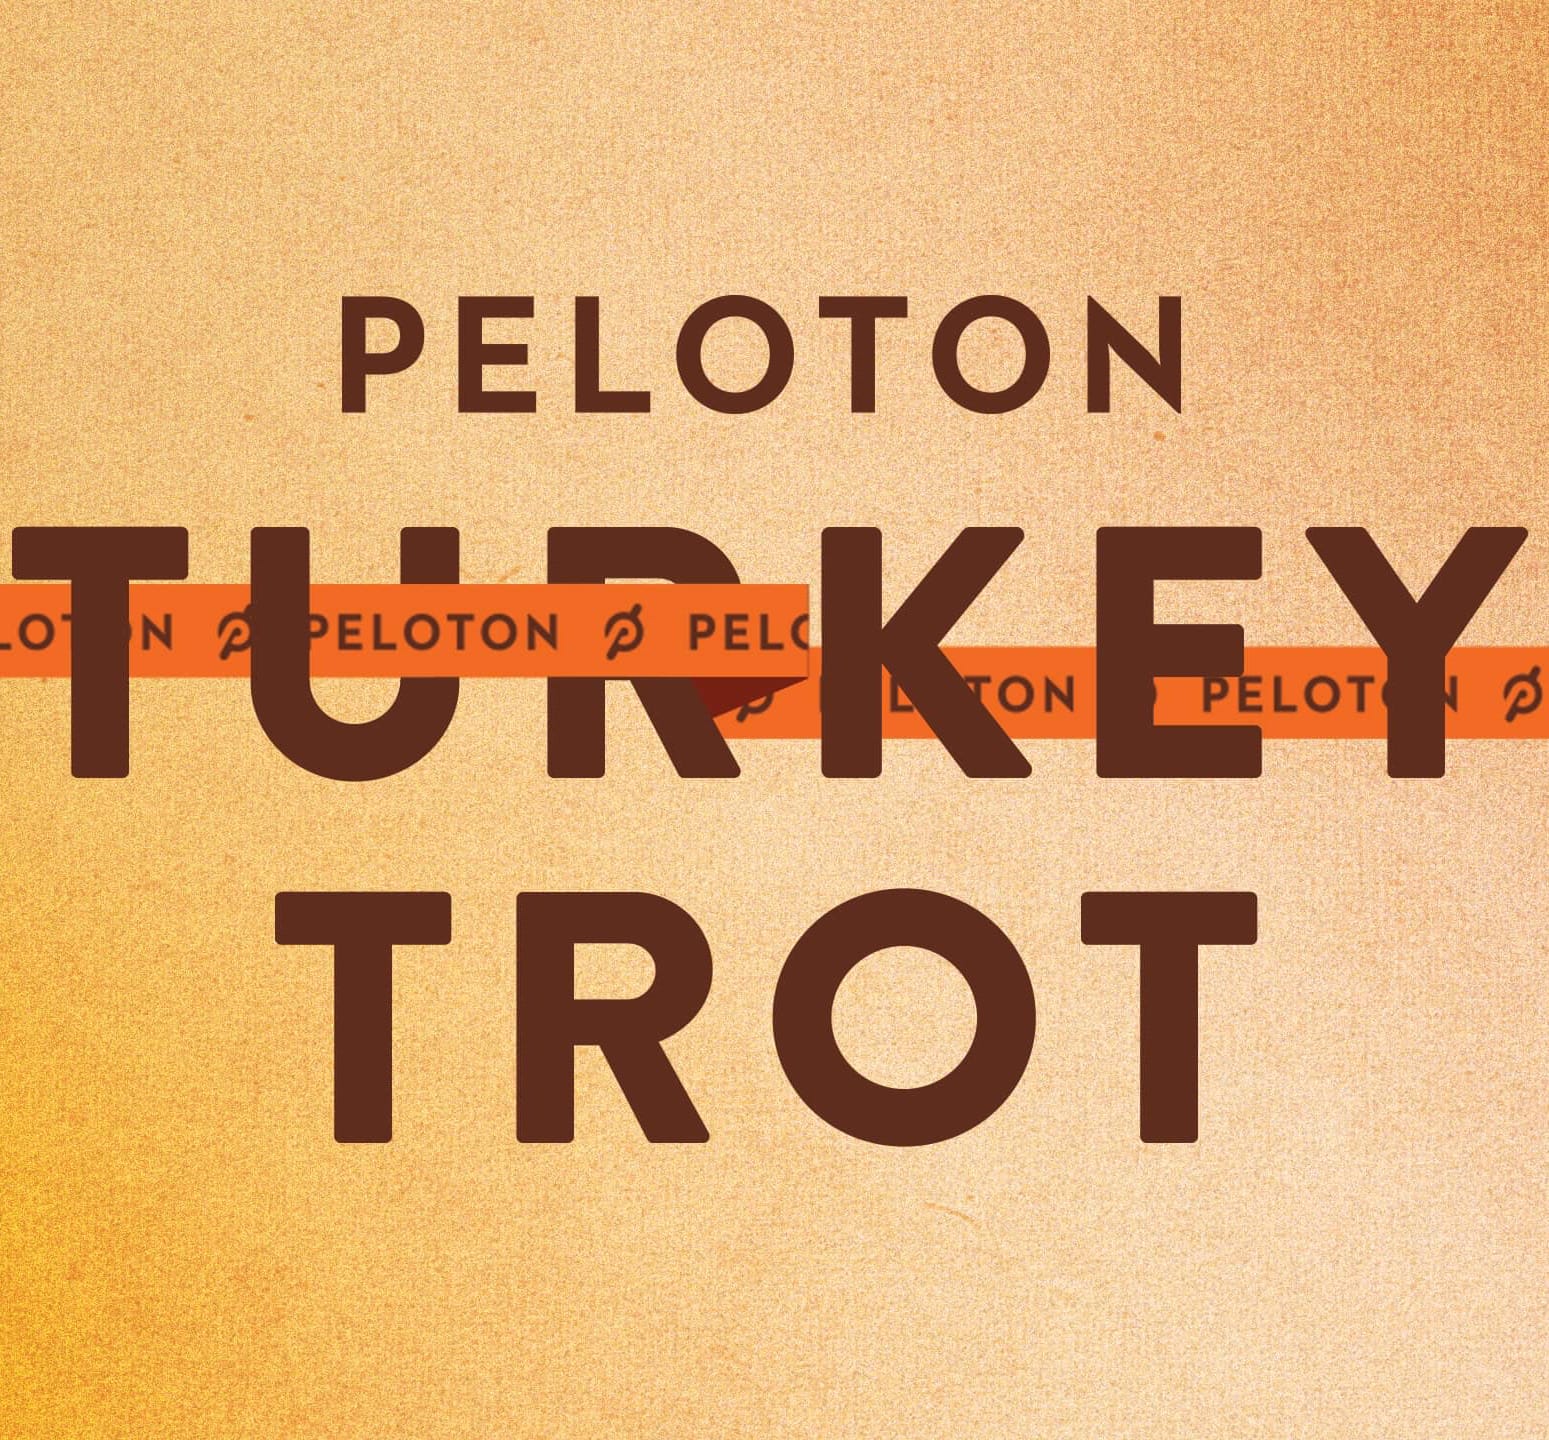 Peloton's 2020 Thanksgiving Turkey Burn Classes + Virtual Turkey Trot